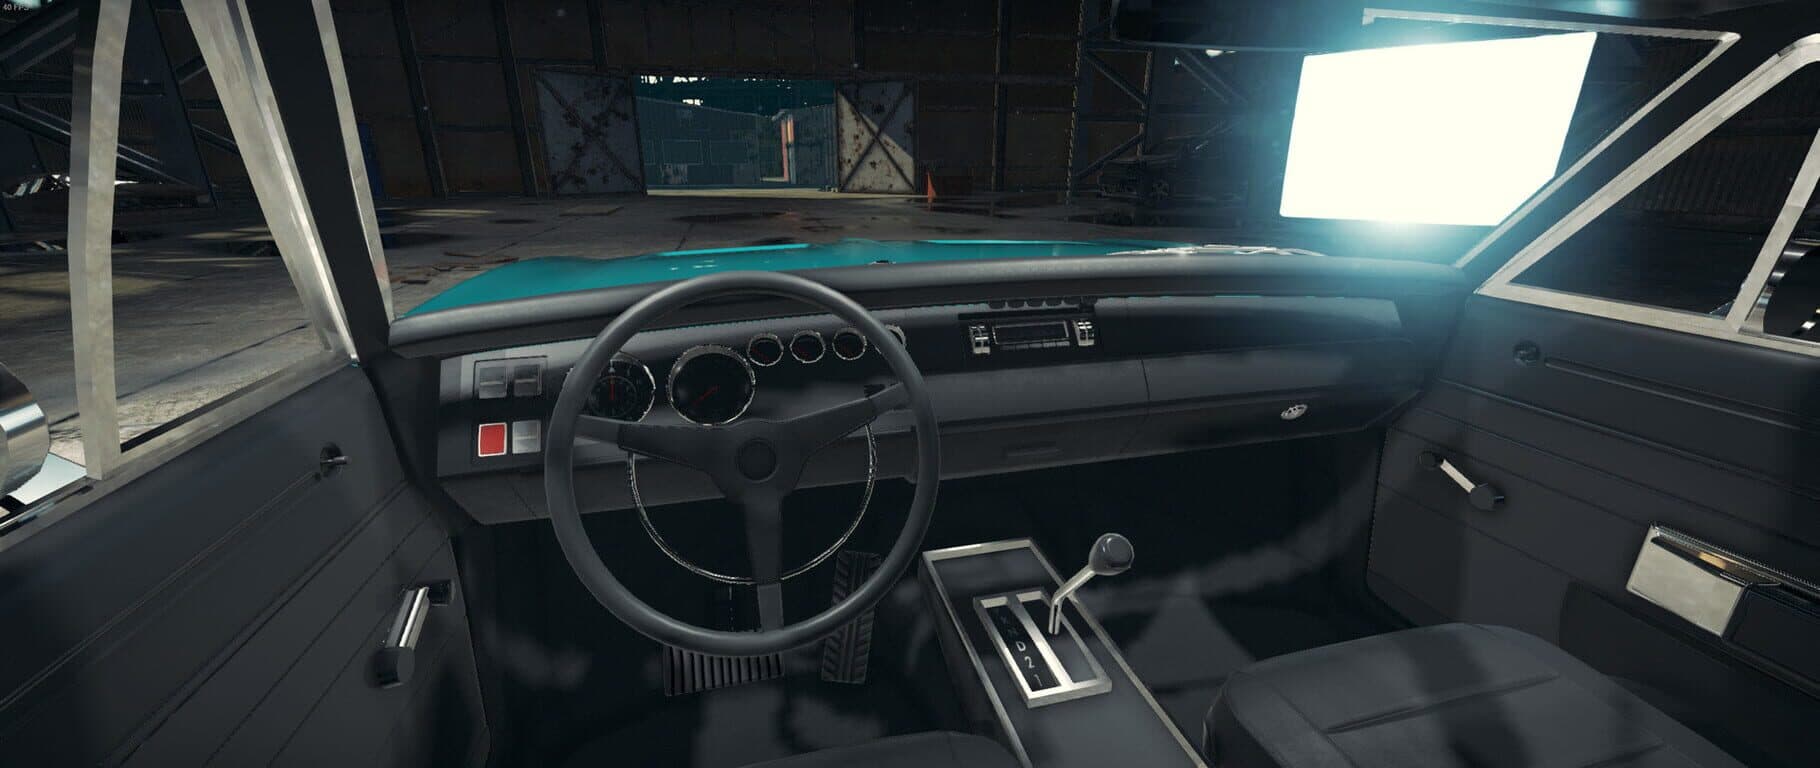 Car Mechanic Simulator 2018: Dodge Image